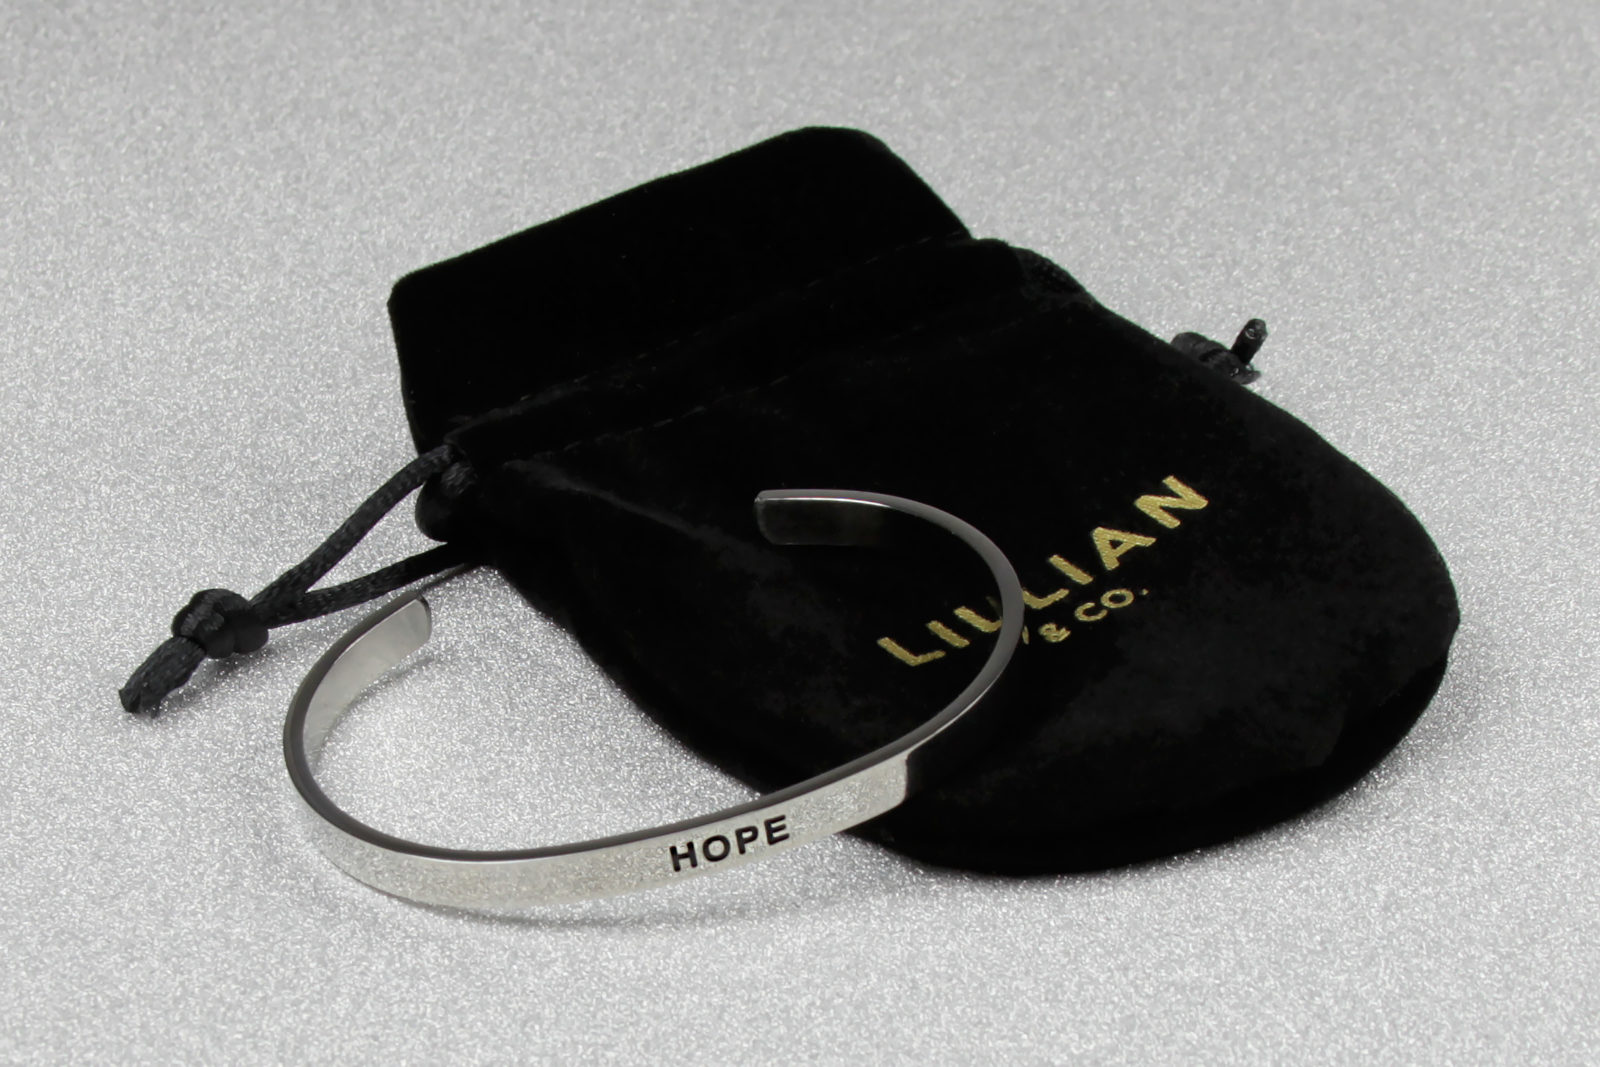 Review – Lillian & Co Princess Leia Hope Bracelet